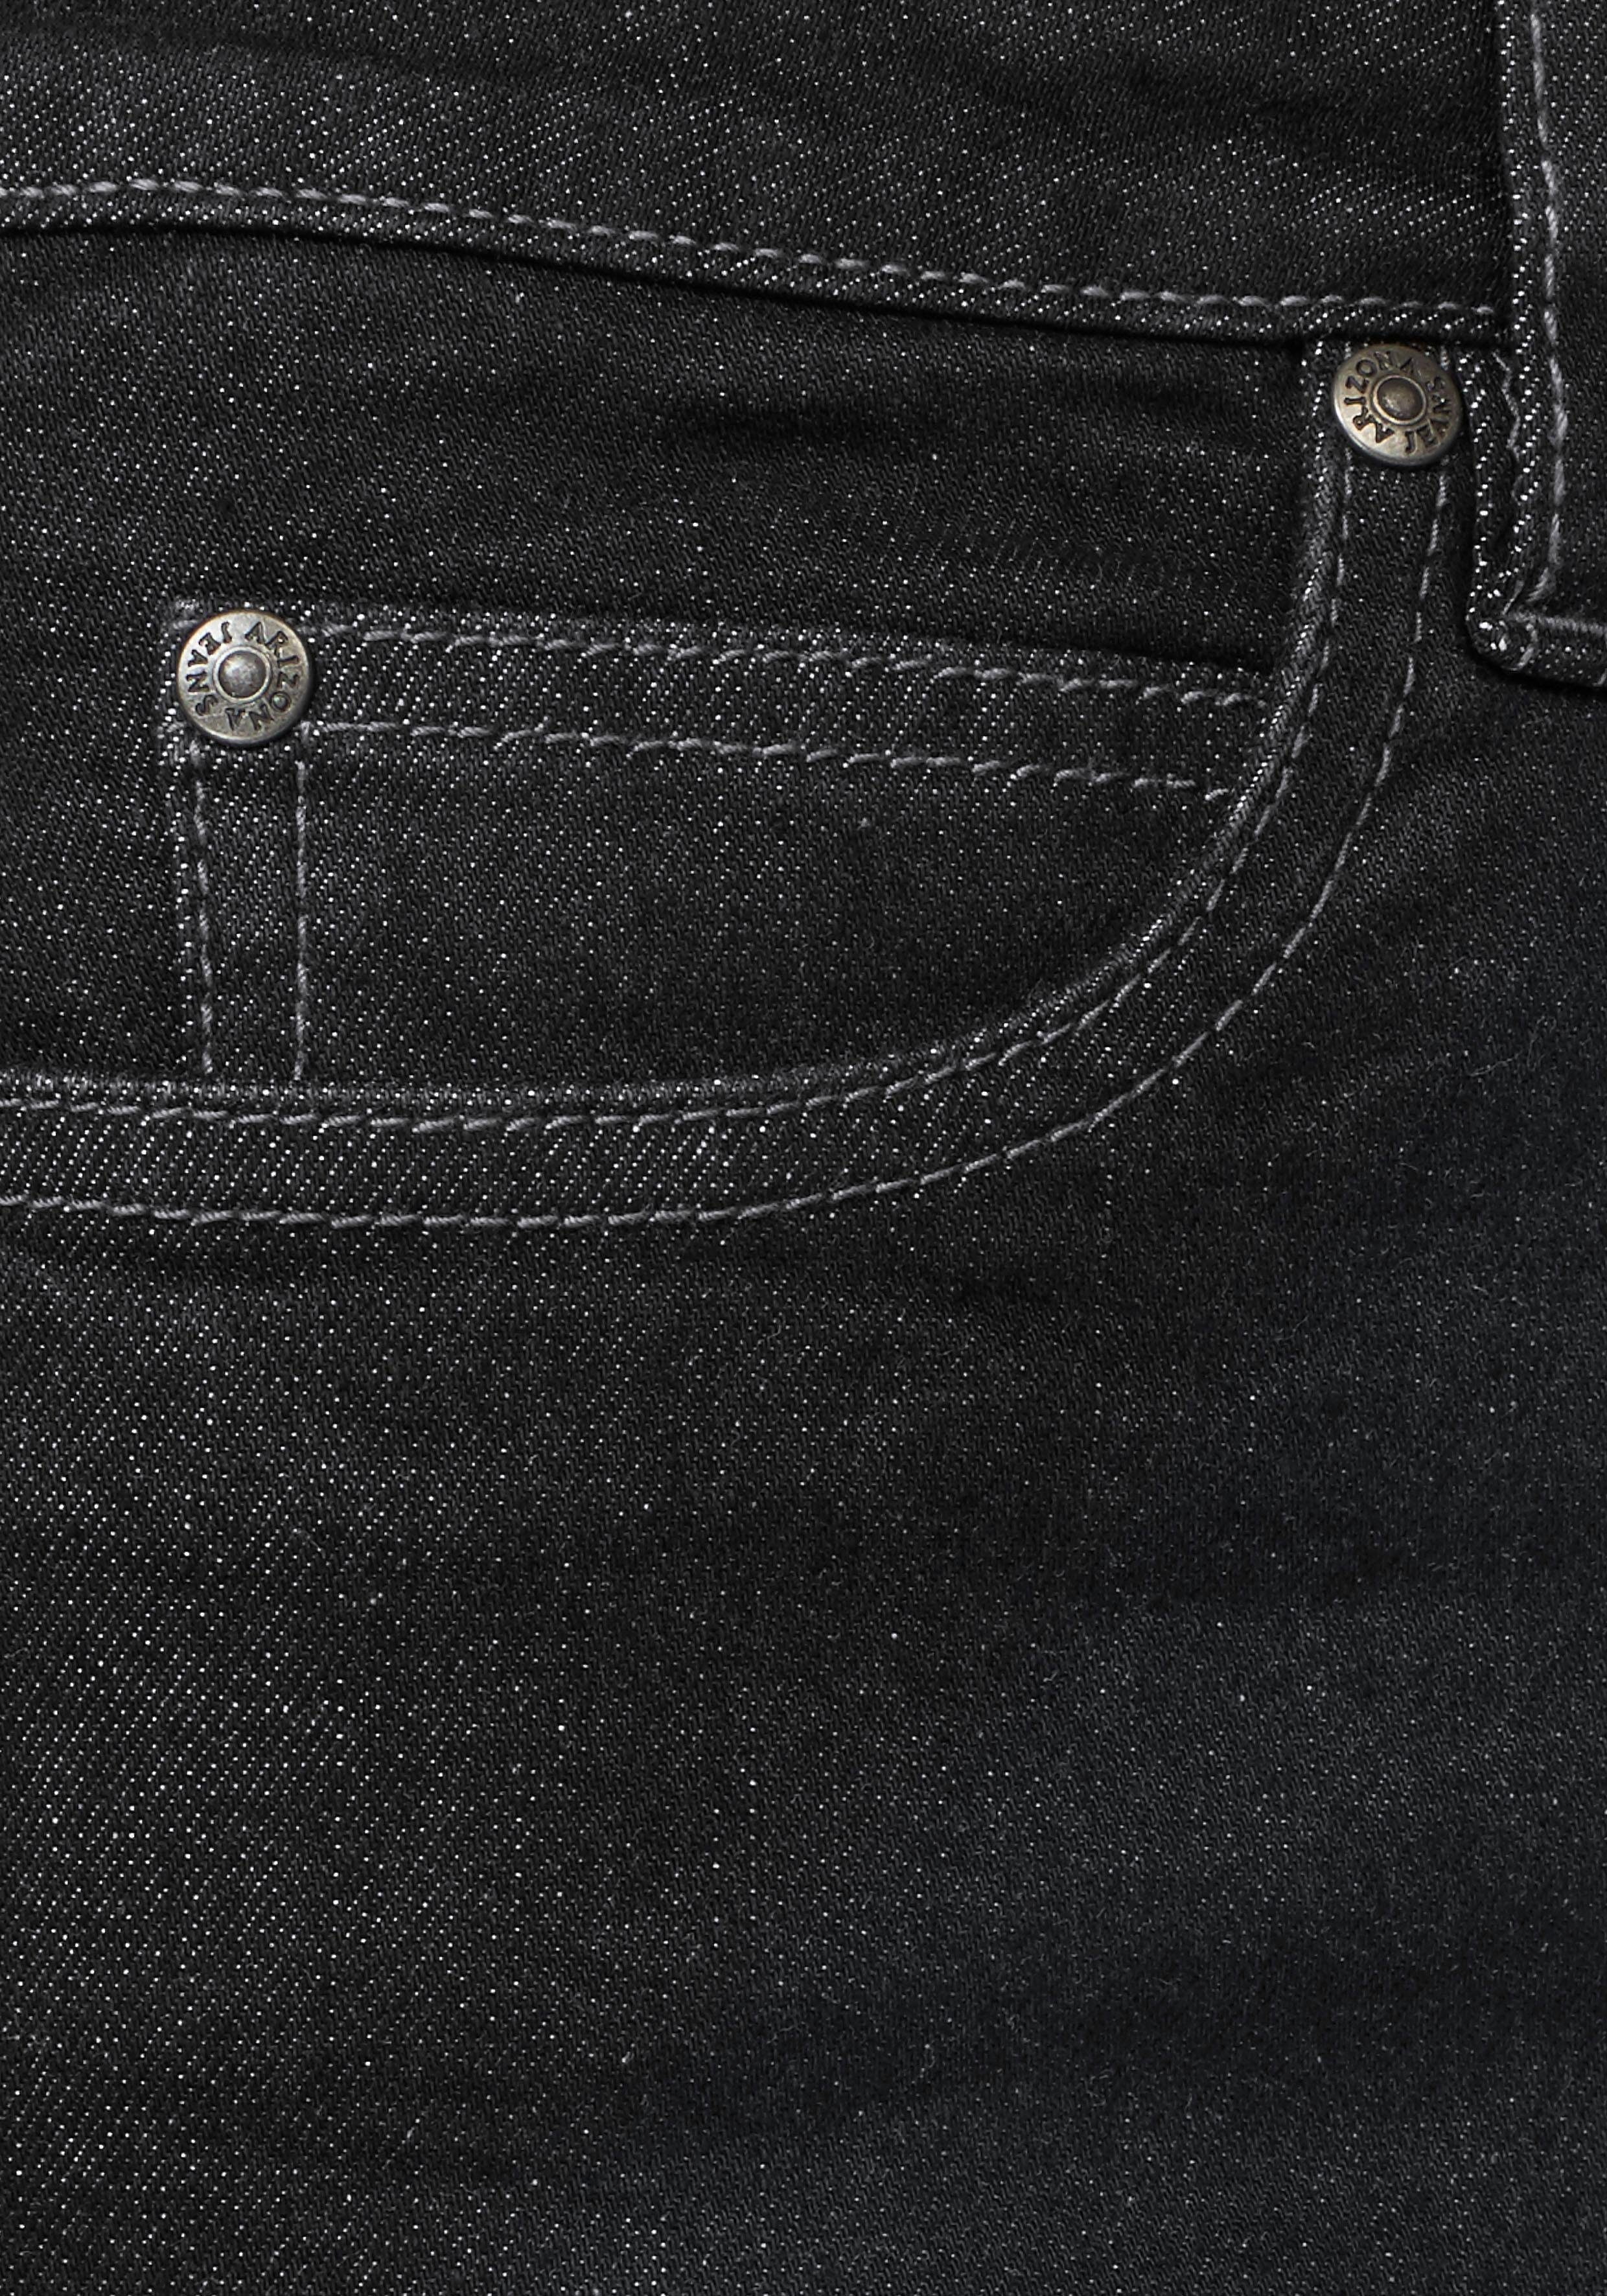 Bootcut-Jeans High black Arizona Comfort-Fit Waist